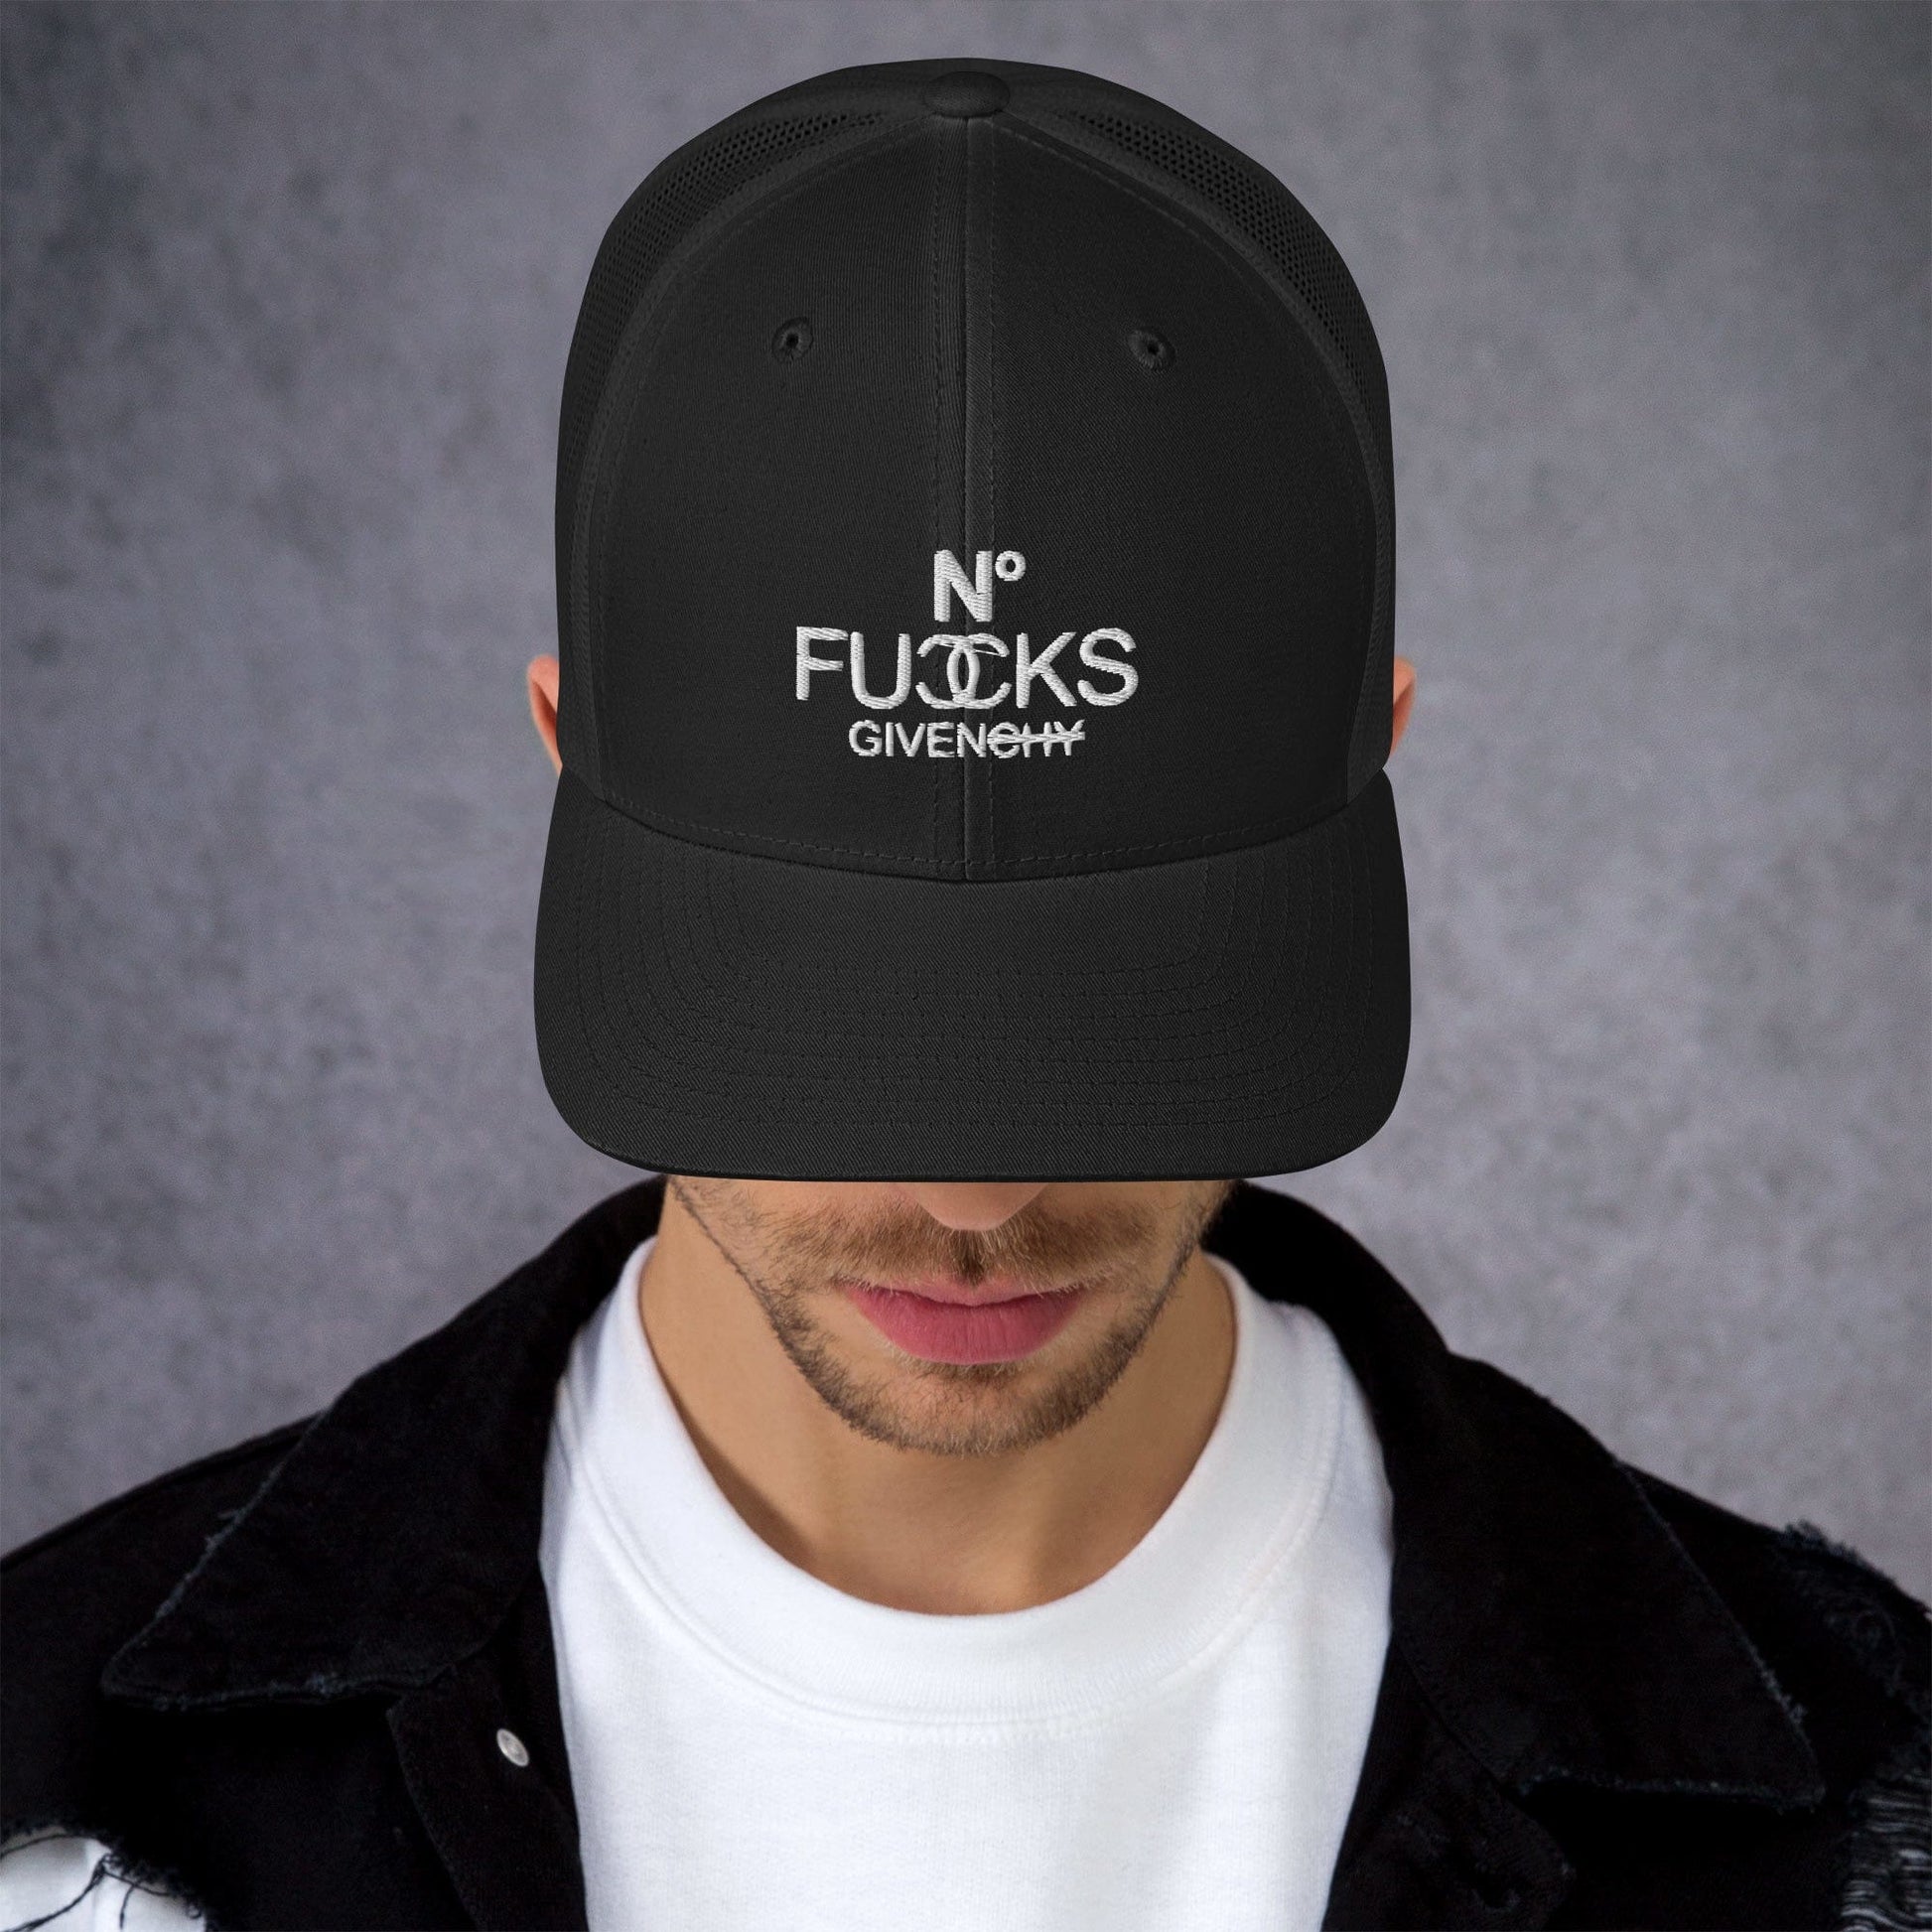 InsensitiviTees™️ Black No Fucks Given Embroidered Snapback Trucker Hat